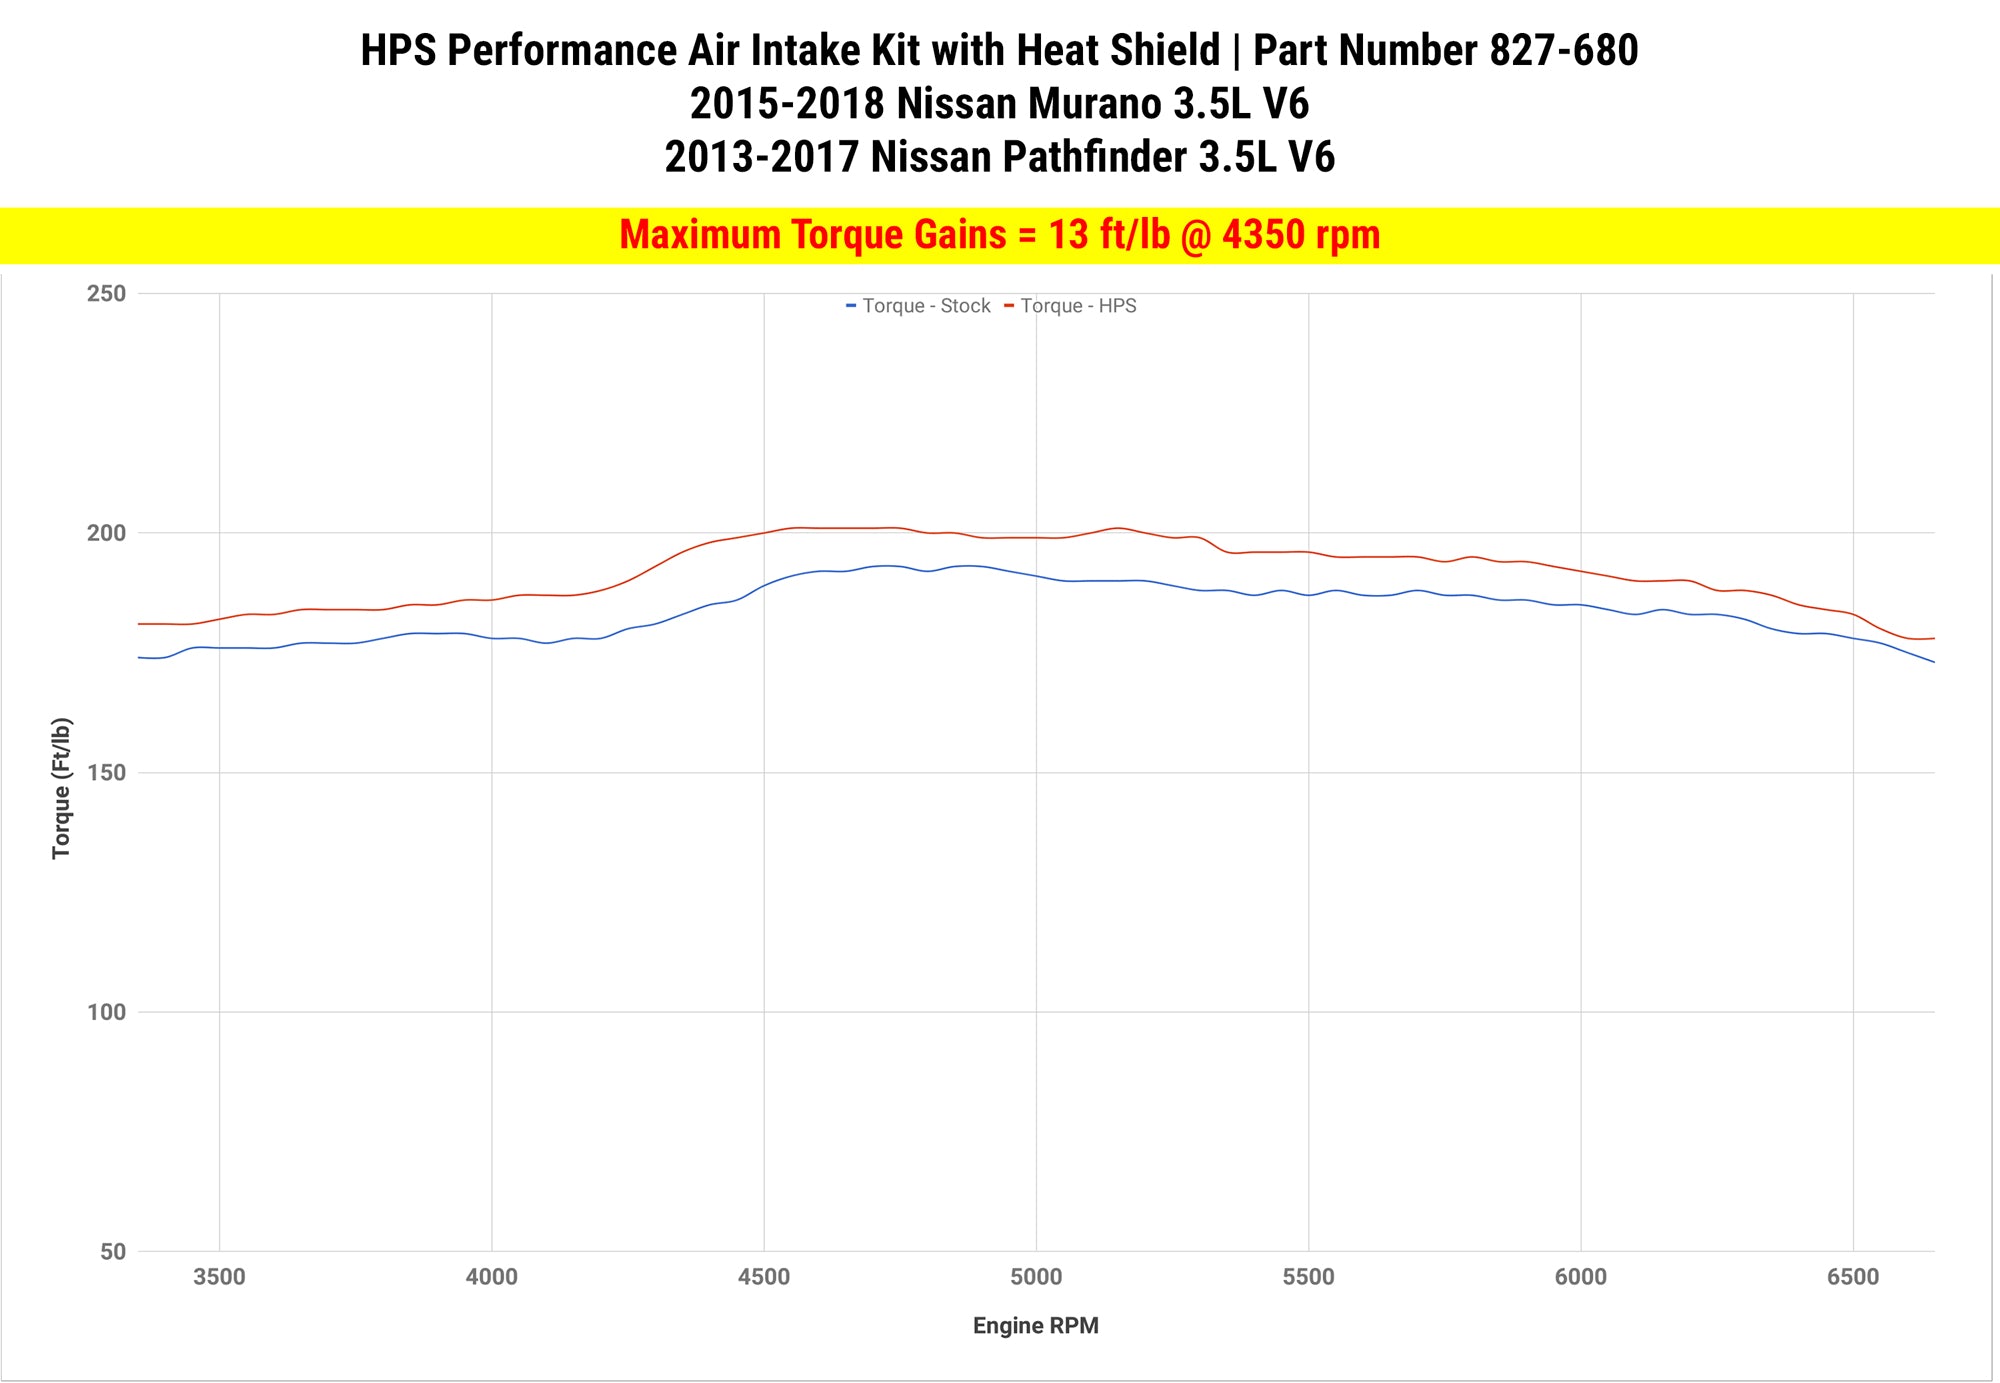 Dyno proven gains 13 ft/lb HPS Performance Shortram Air Intake Kit 2015-2018 Nissan Murano 3.5L V6 827-680R